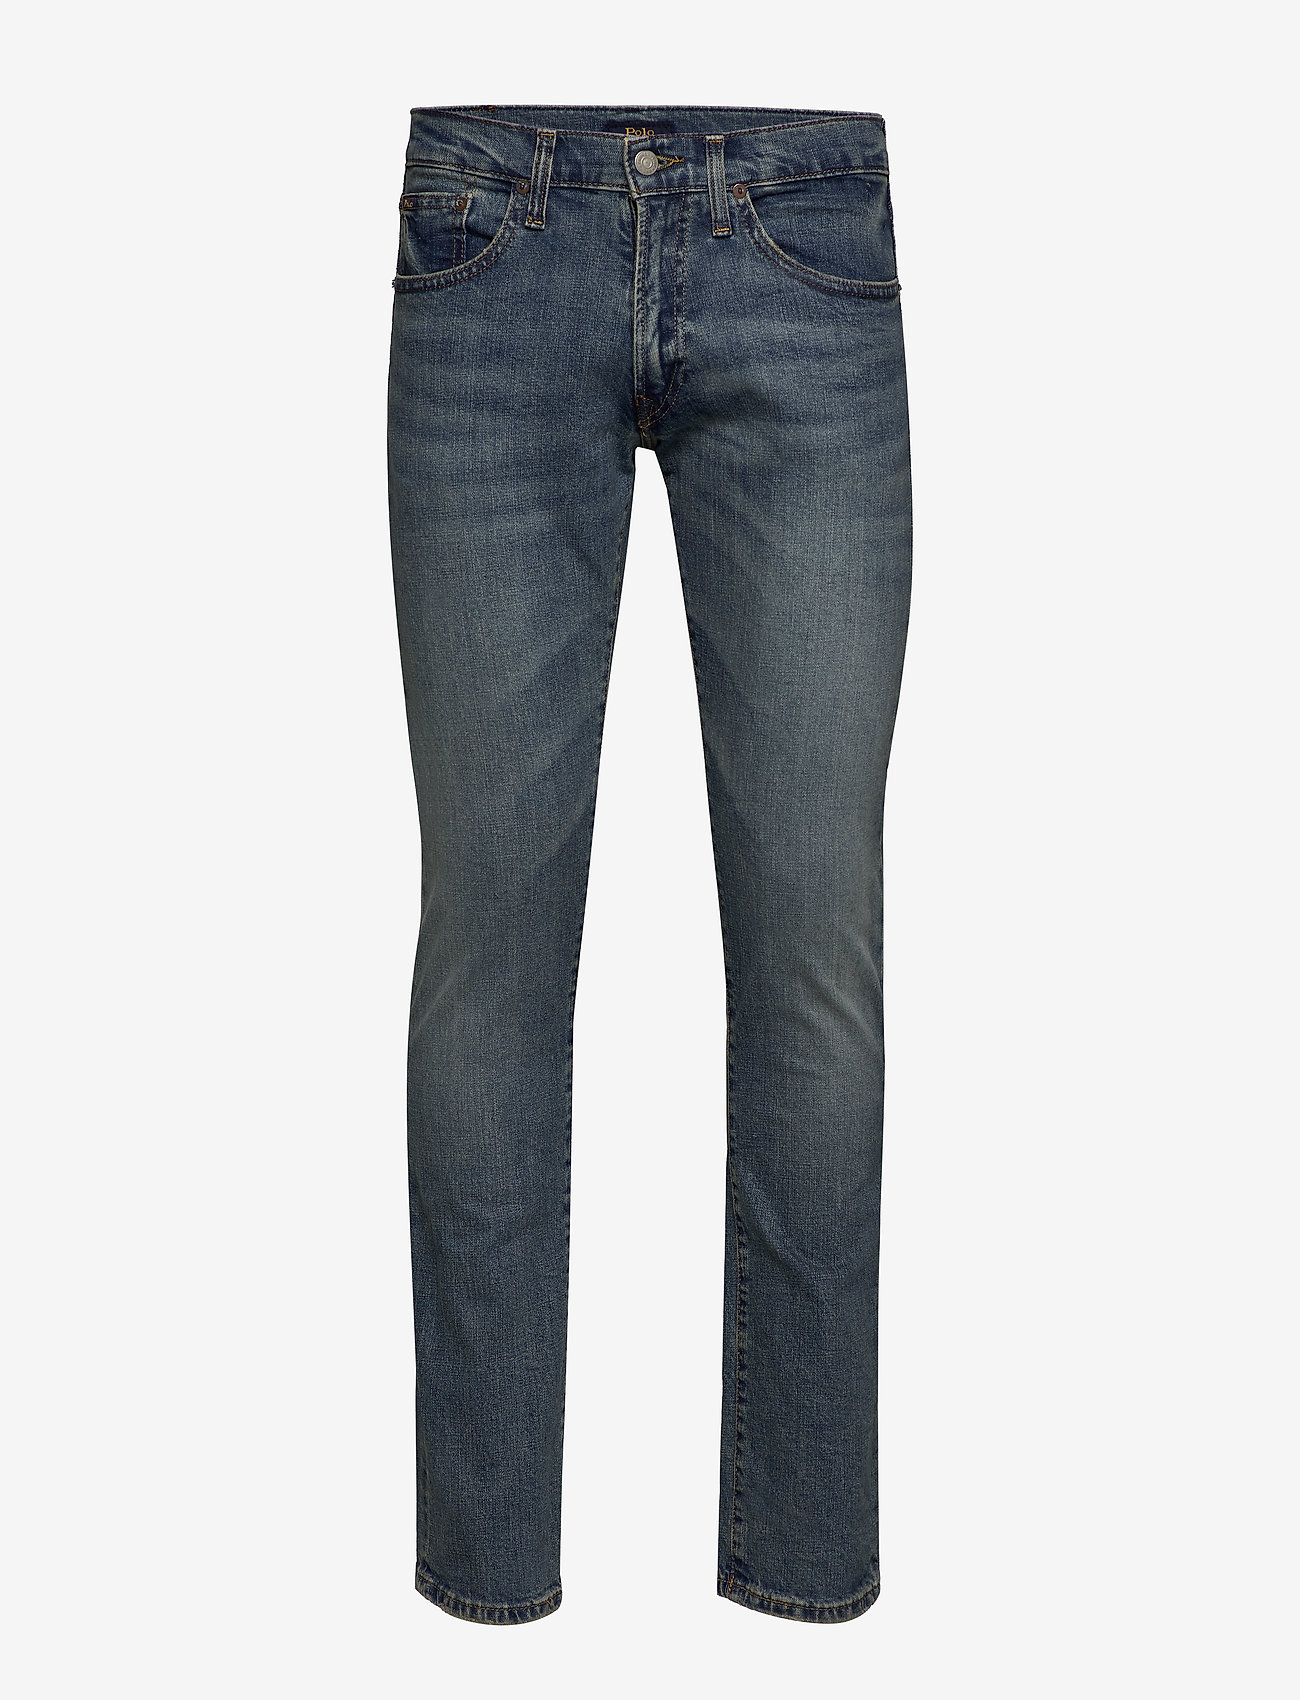 ralph lauren jeans varick slim straight